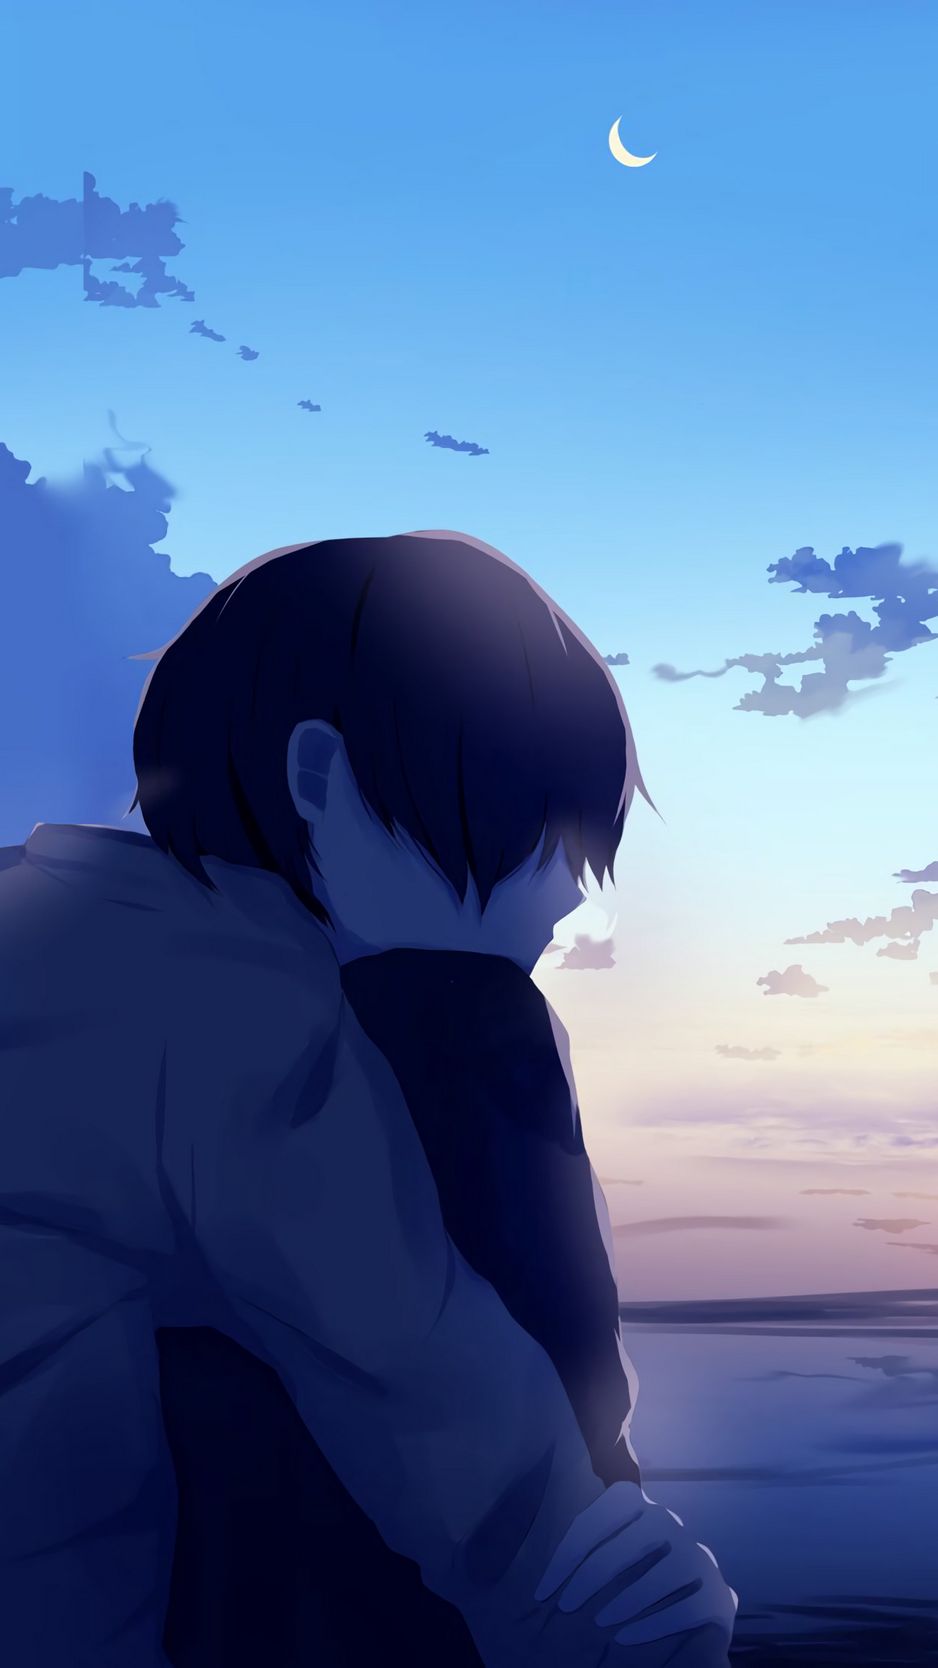 123 Saddest Anime That Should Make You Cry | Bored Panda